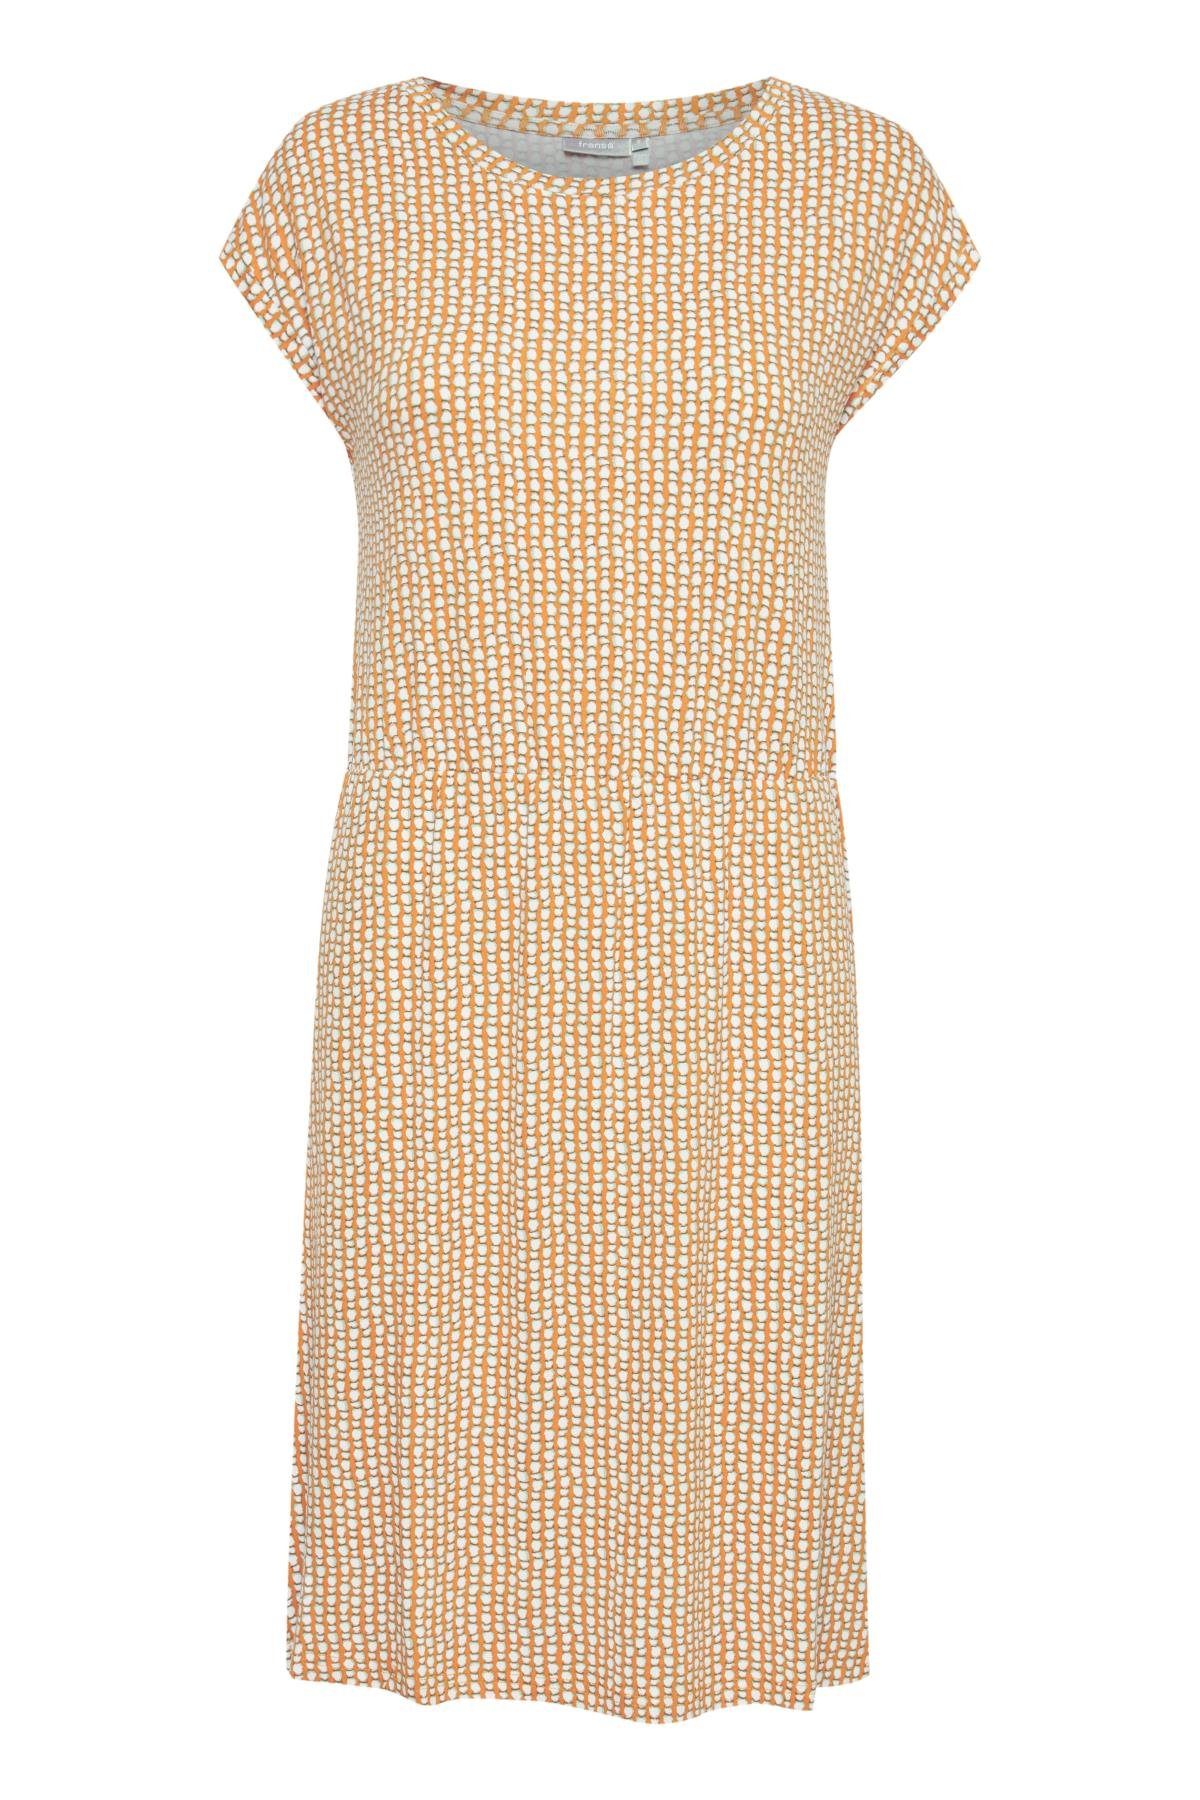 fransa Jerseykleid Fransa Orange Dusty 4 FRAMDOT graphic - mix 20609230 Dress